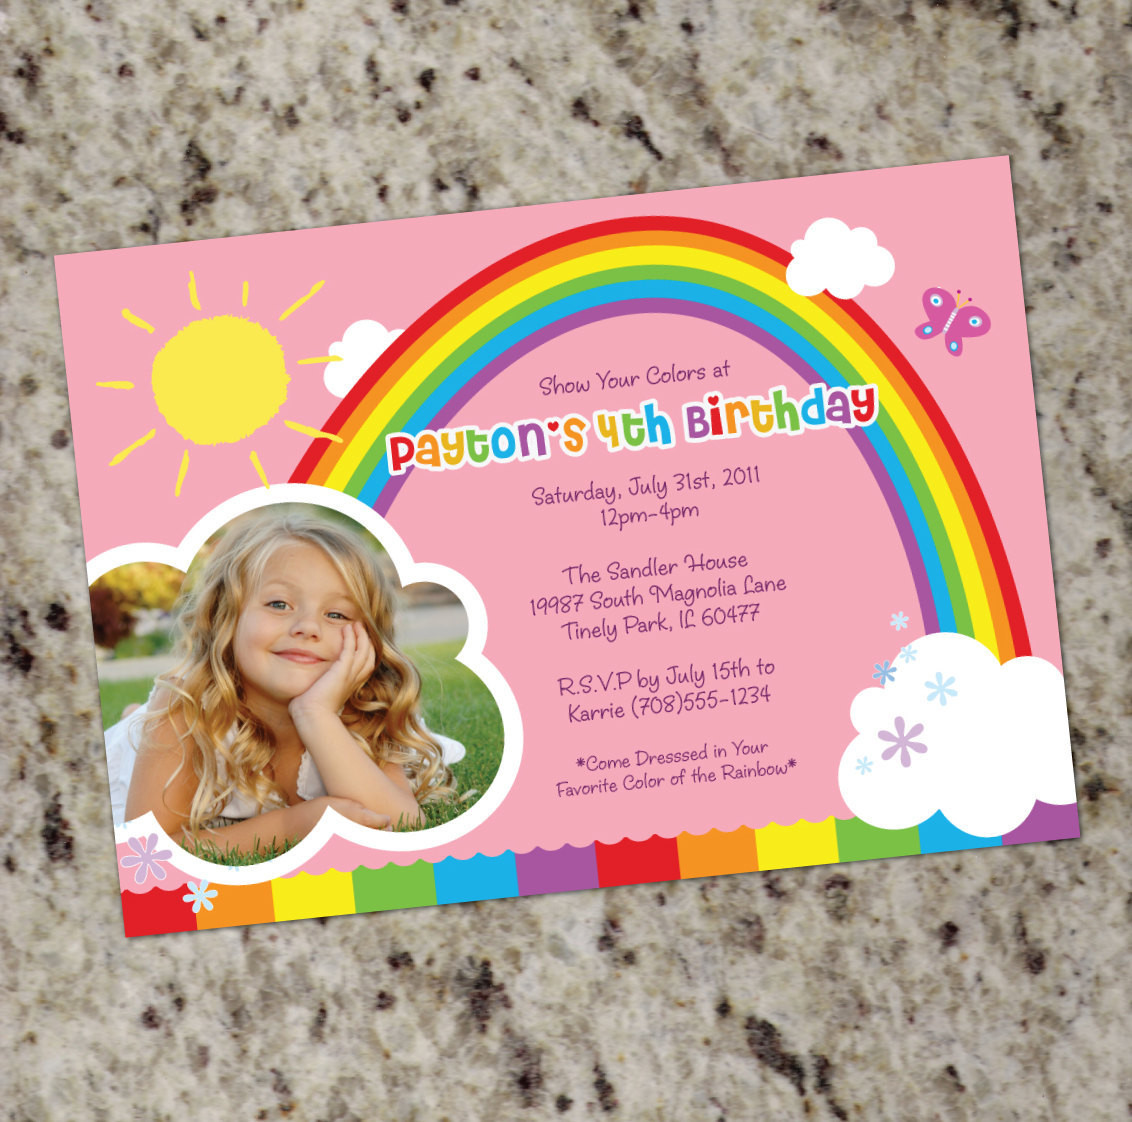 Best ideas about Rainbow Birthday Invitations
. Save or Pin RAINBOW PARTY Birthday Party Invitations Printable Design Now.